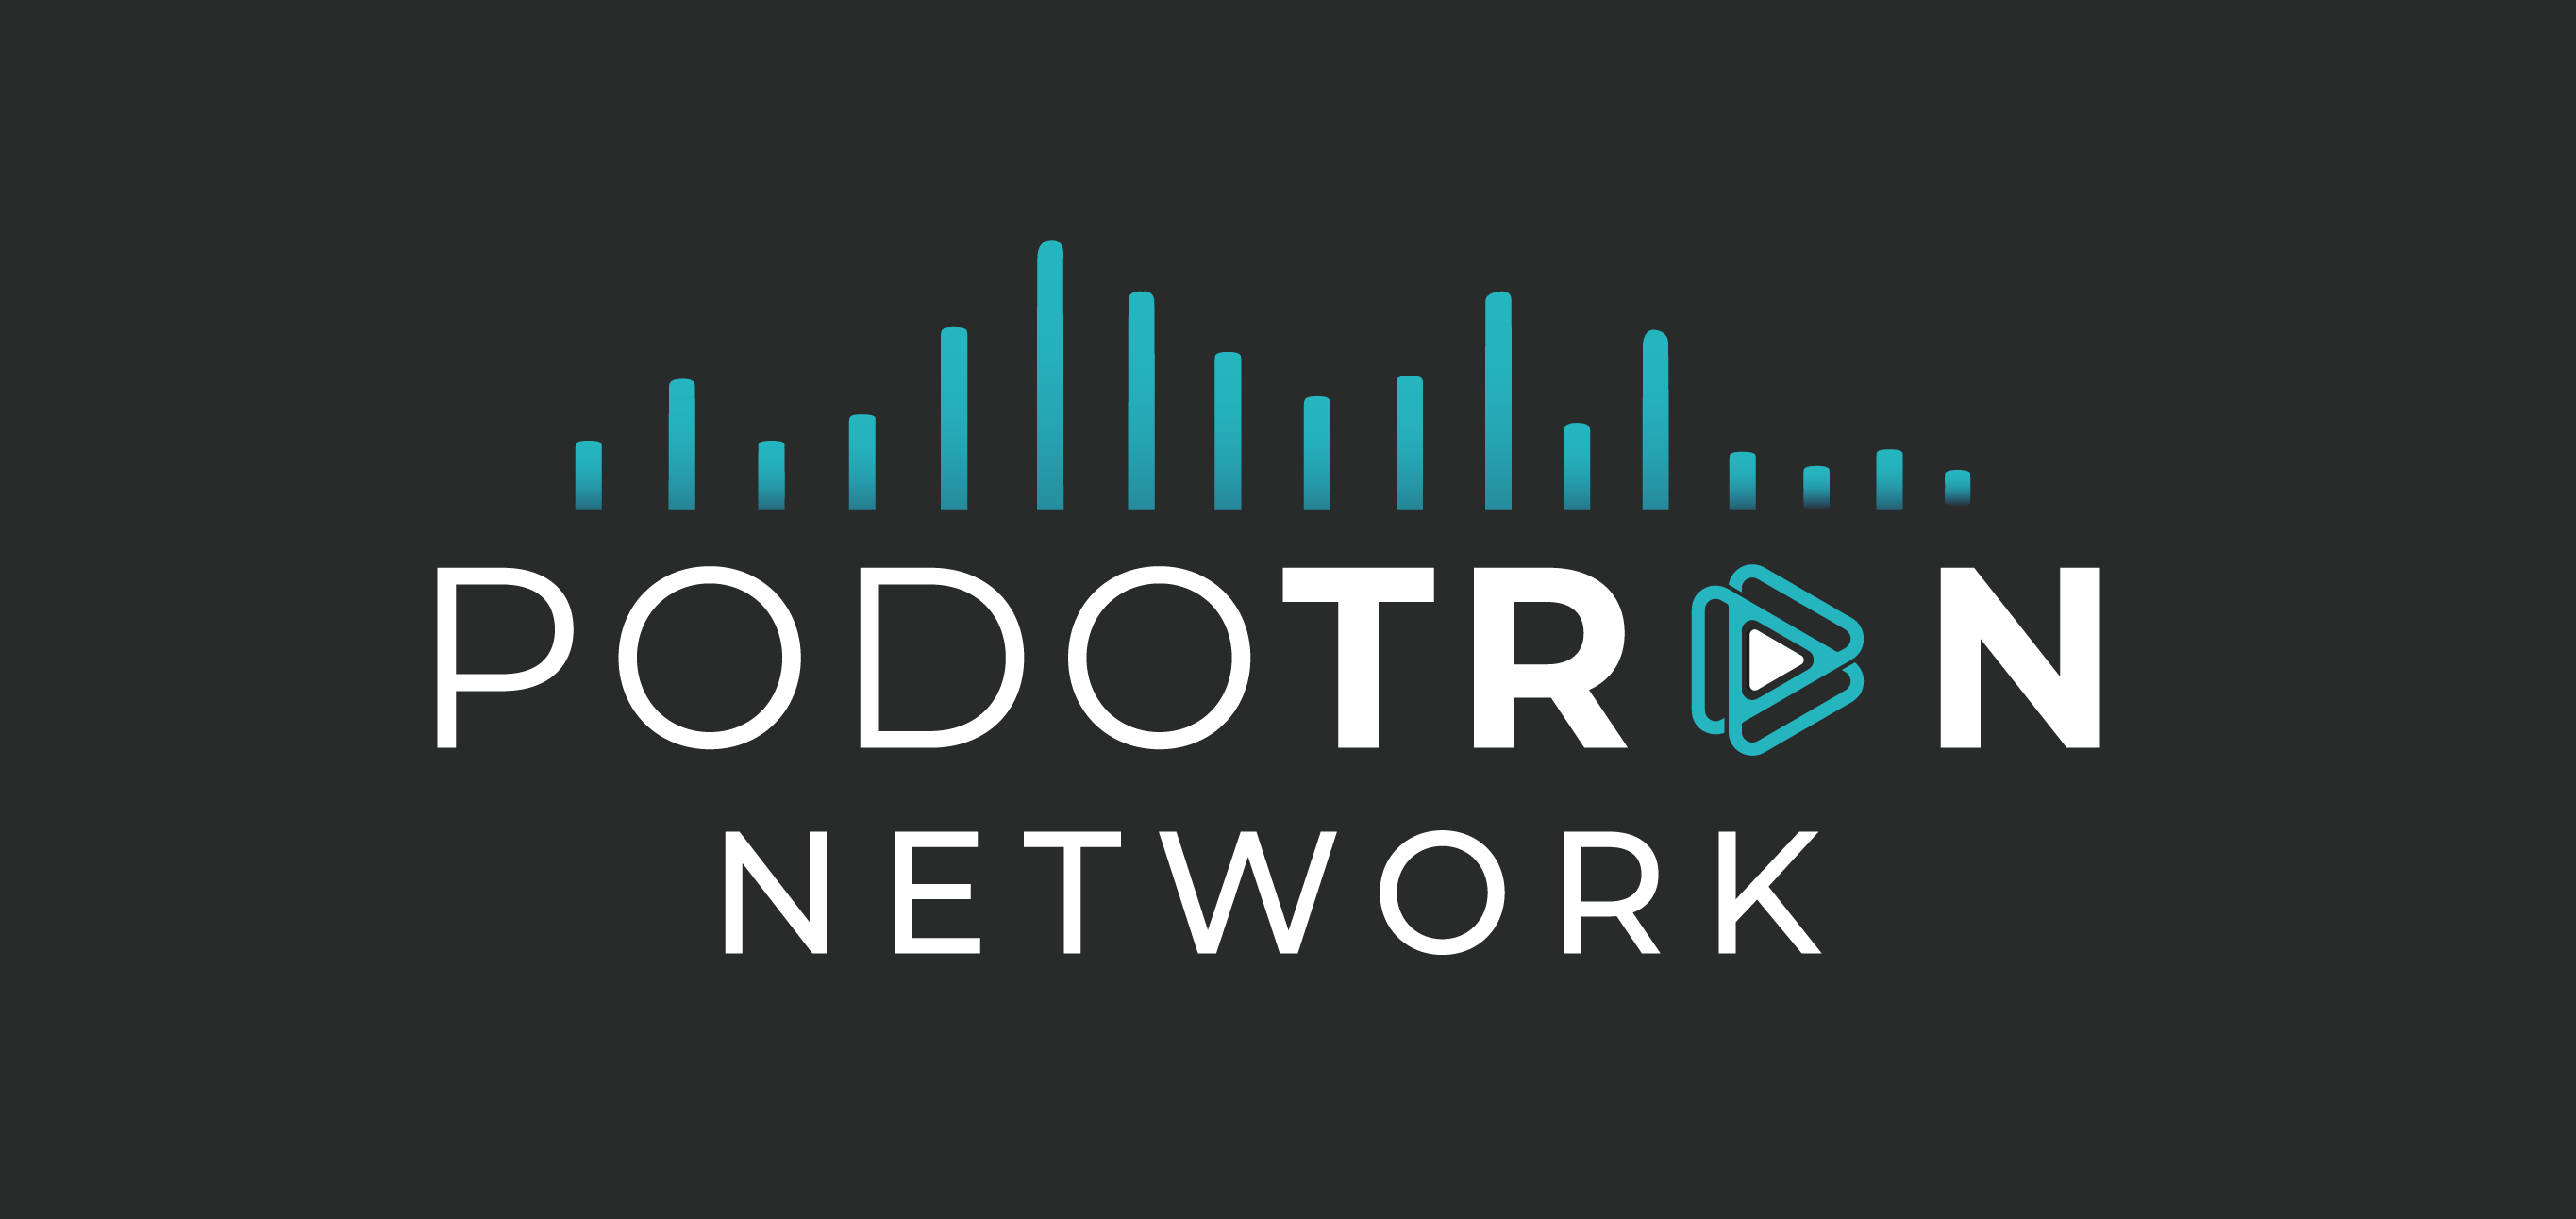 Podotron Network